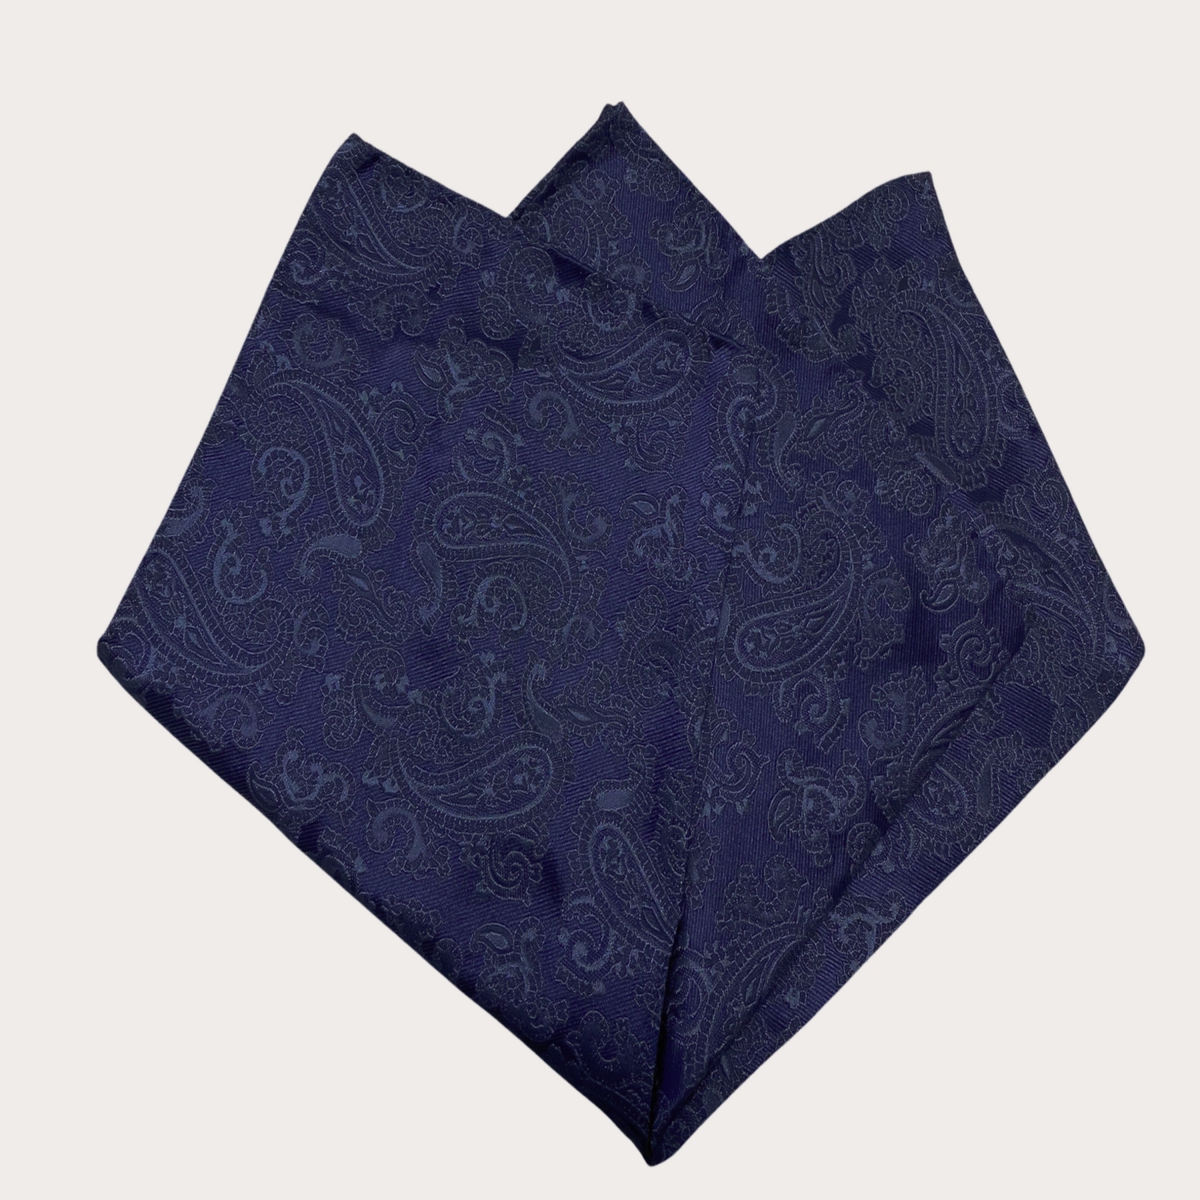 BRUCLE Pañuelo de bolsillo de seda jacquard, estampado paisley azul marino